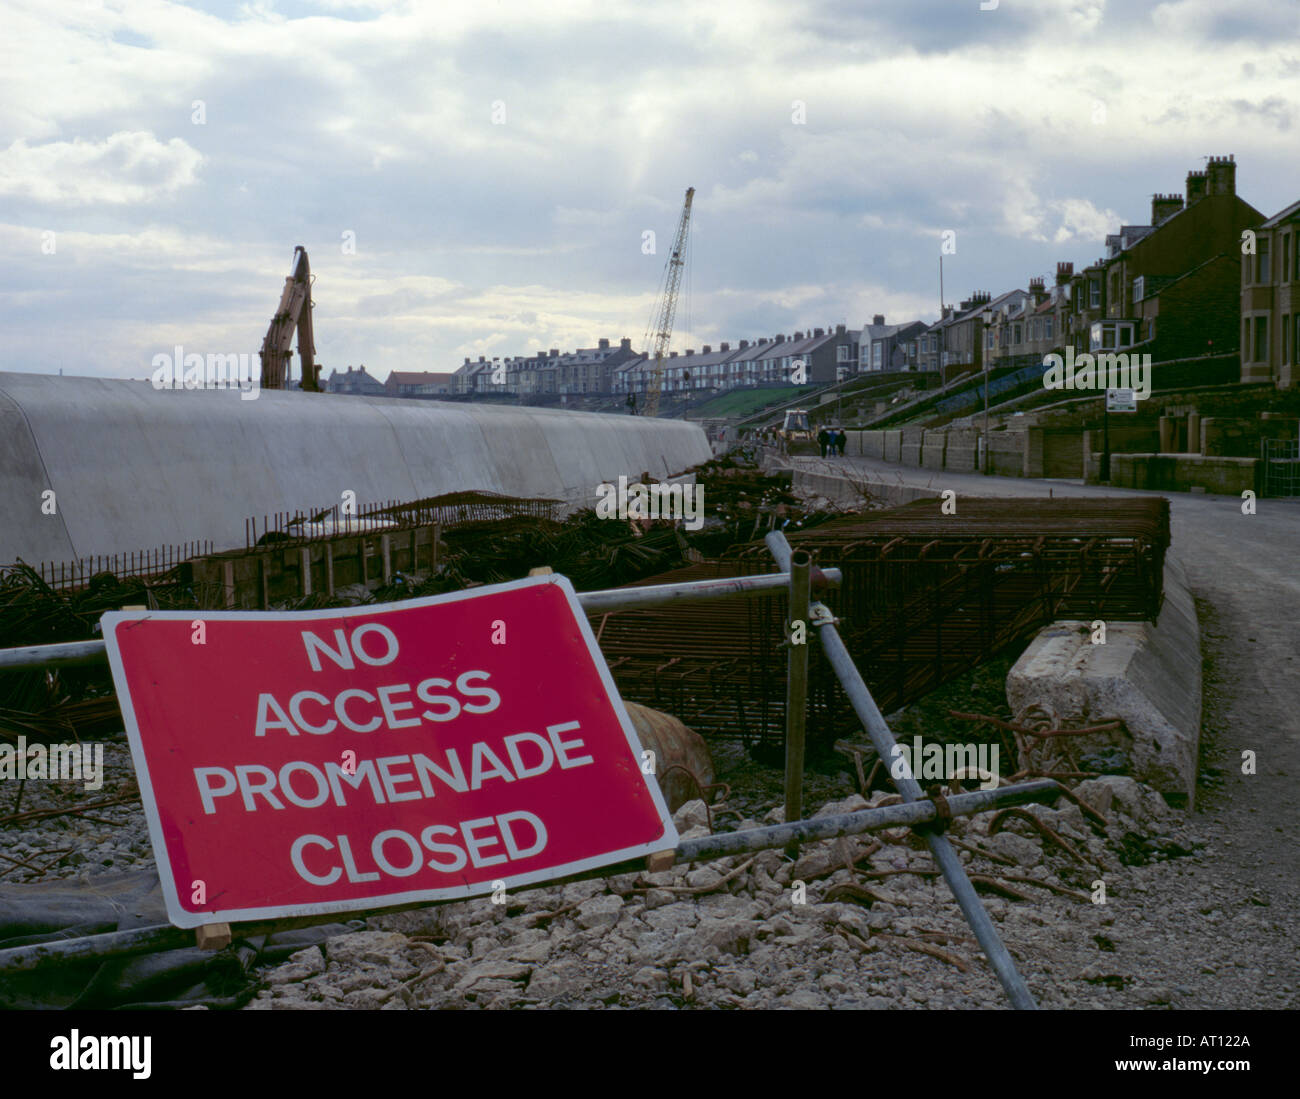 'No Access Promenade Closed' sign, during construction of coastal defence at Newbiggin-by-the-Sea, Northumberland, England, UK. Stock Photo